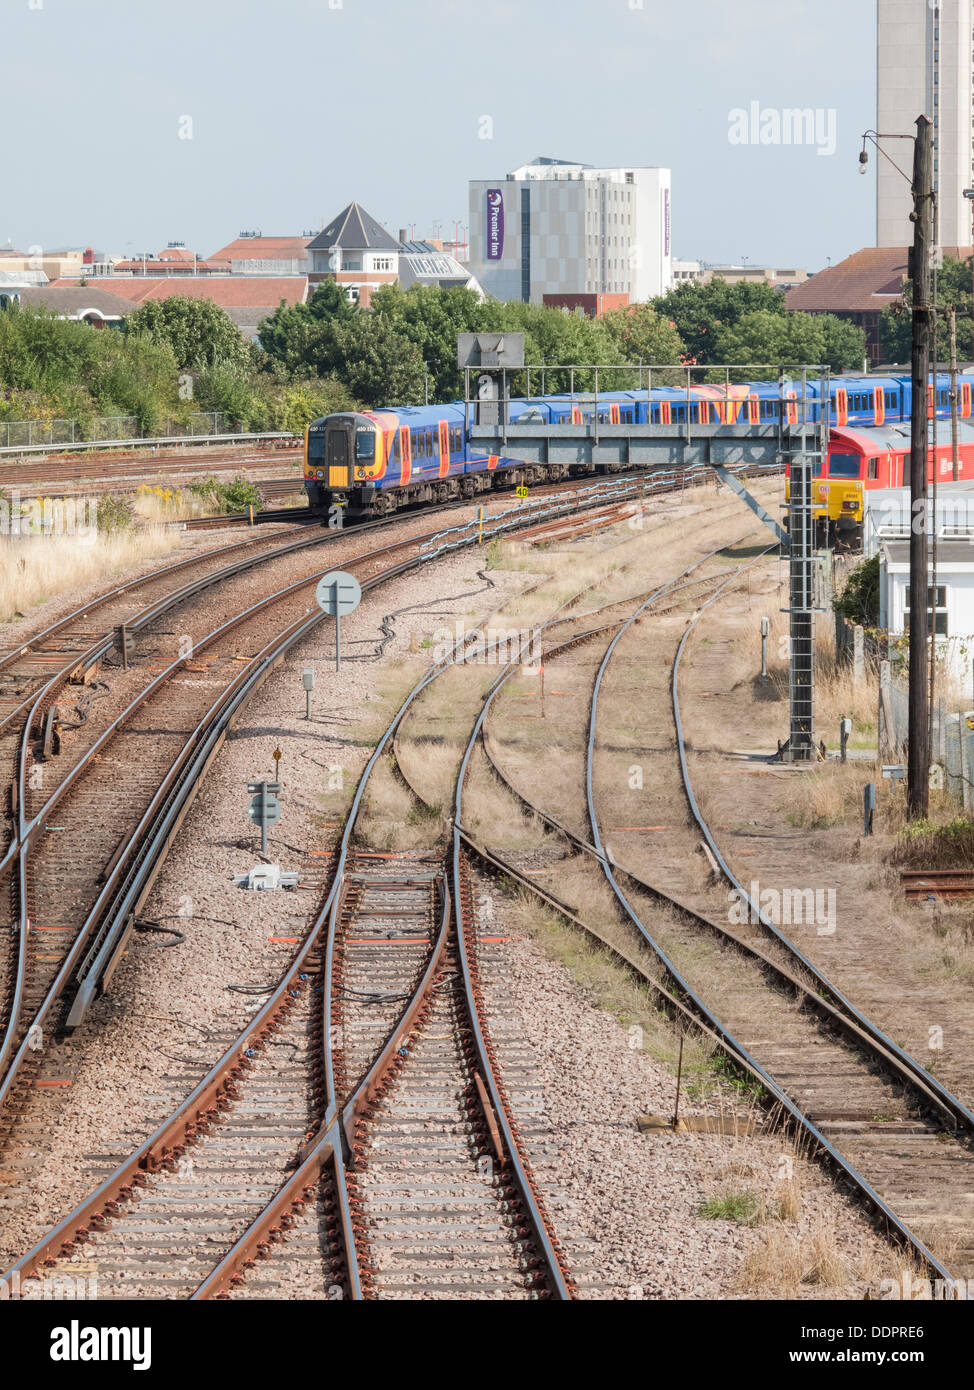 Railway tracks leading towards Woking, Surrey, England with South West Trains passenger train approaching Woking station Stock Photo